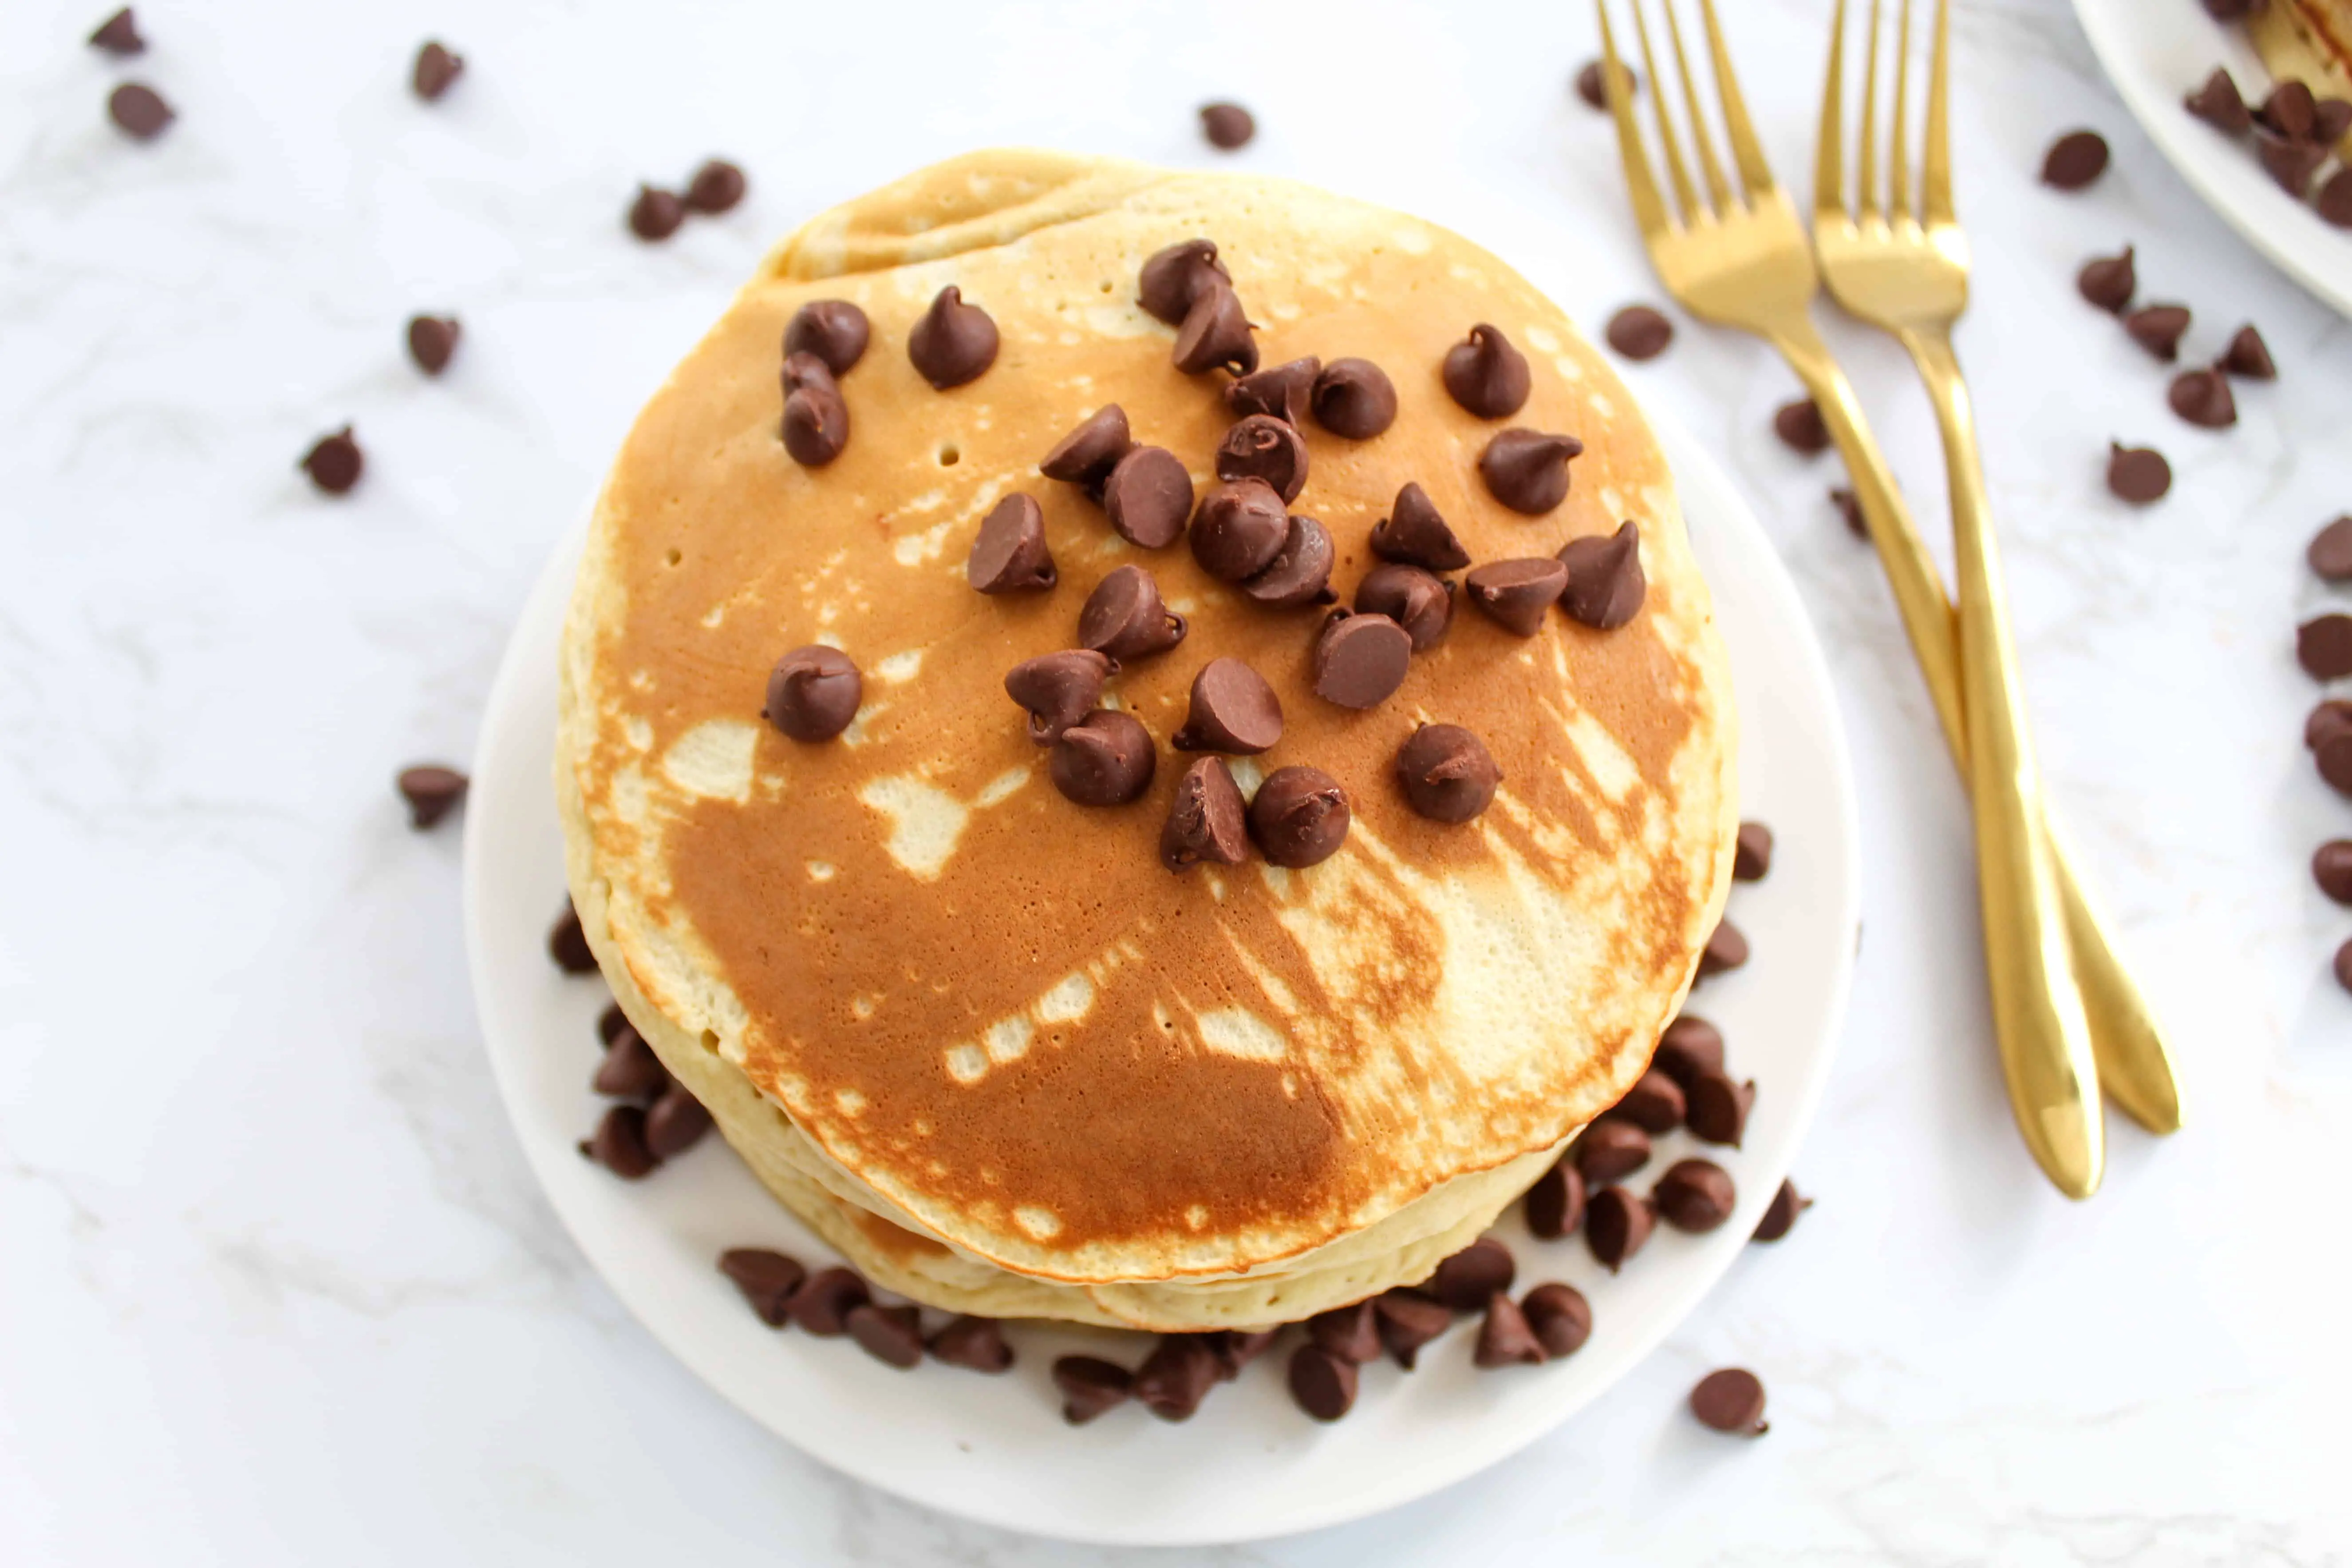 How to make pancakes without baking powder